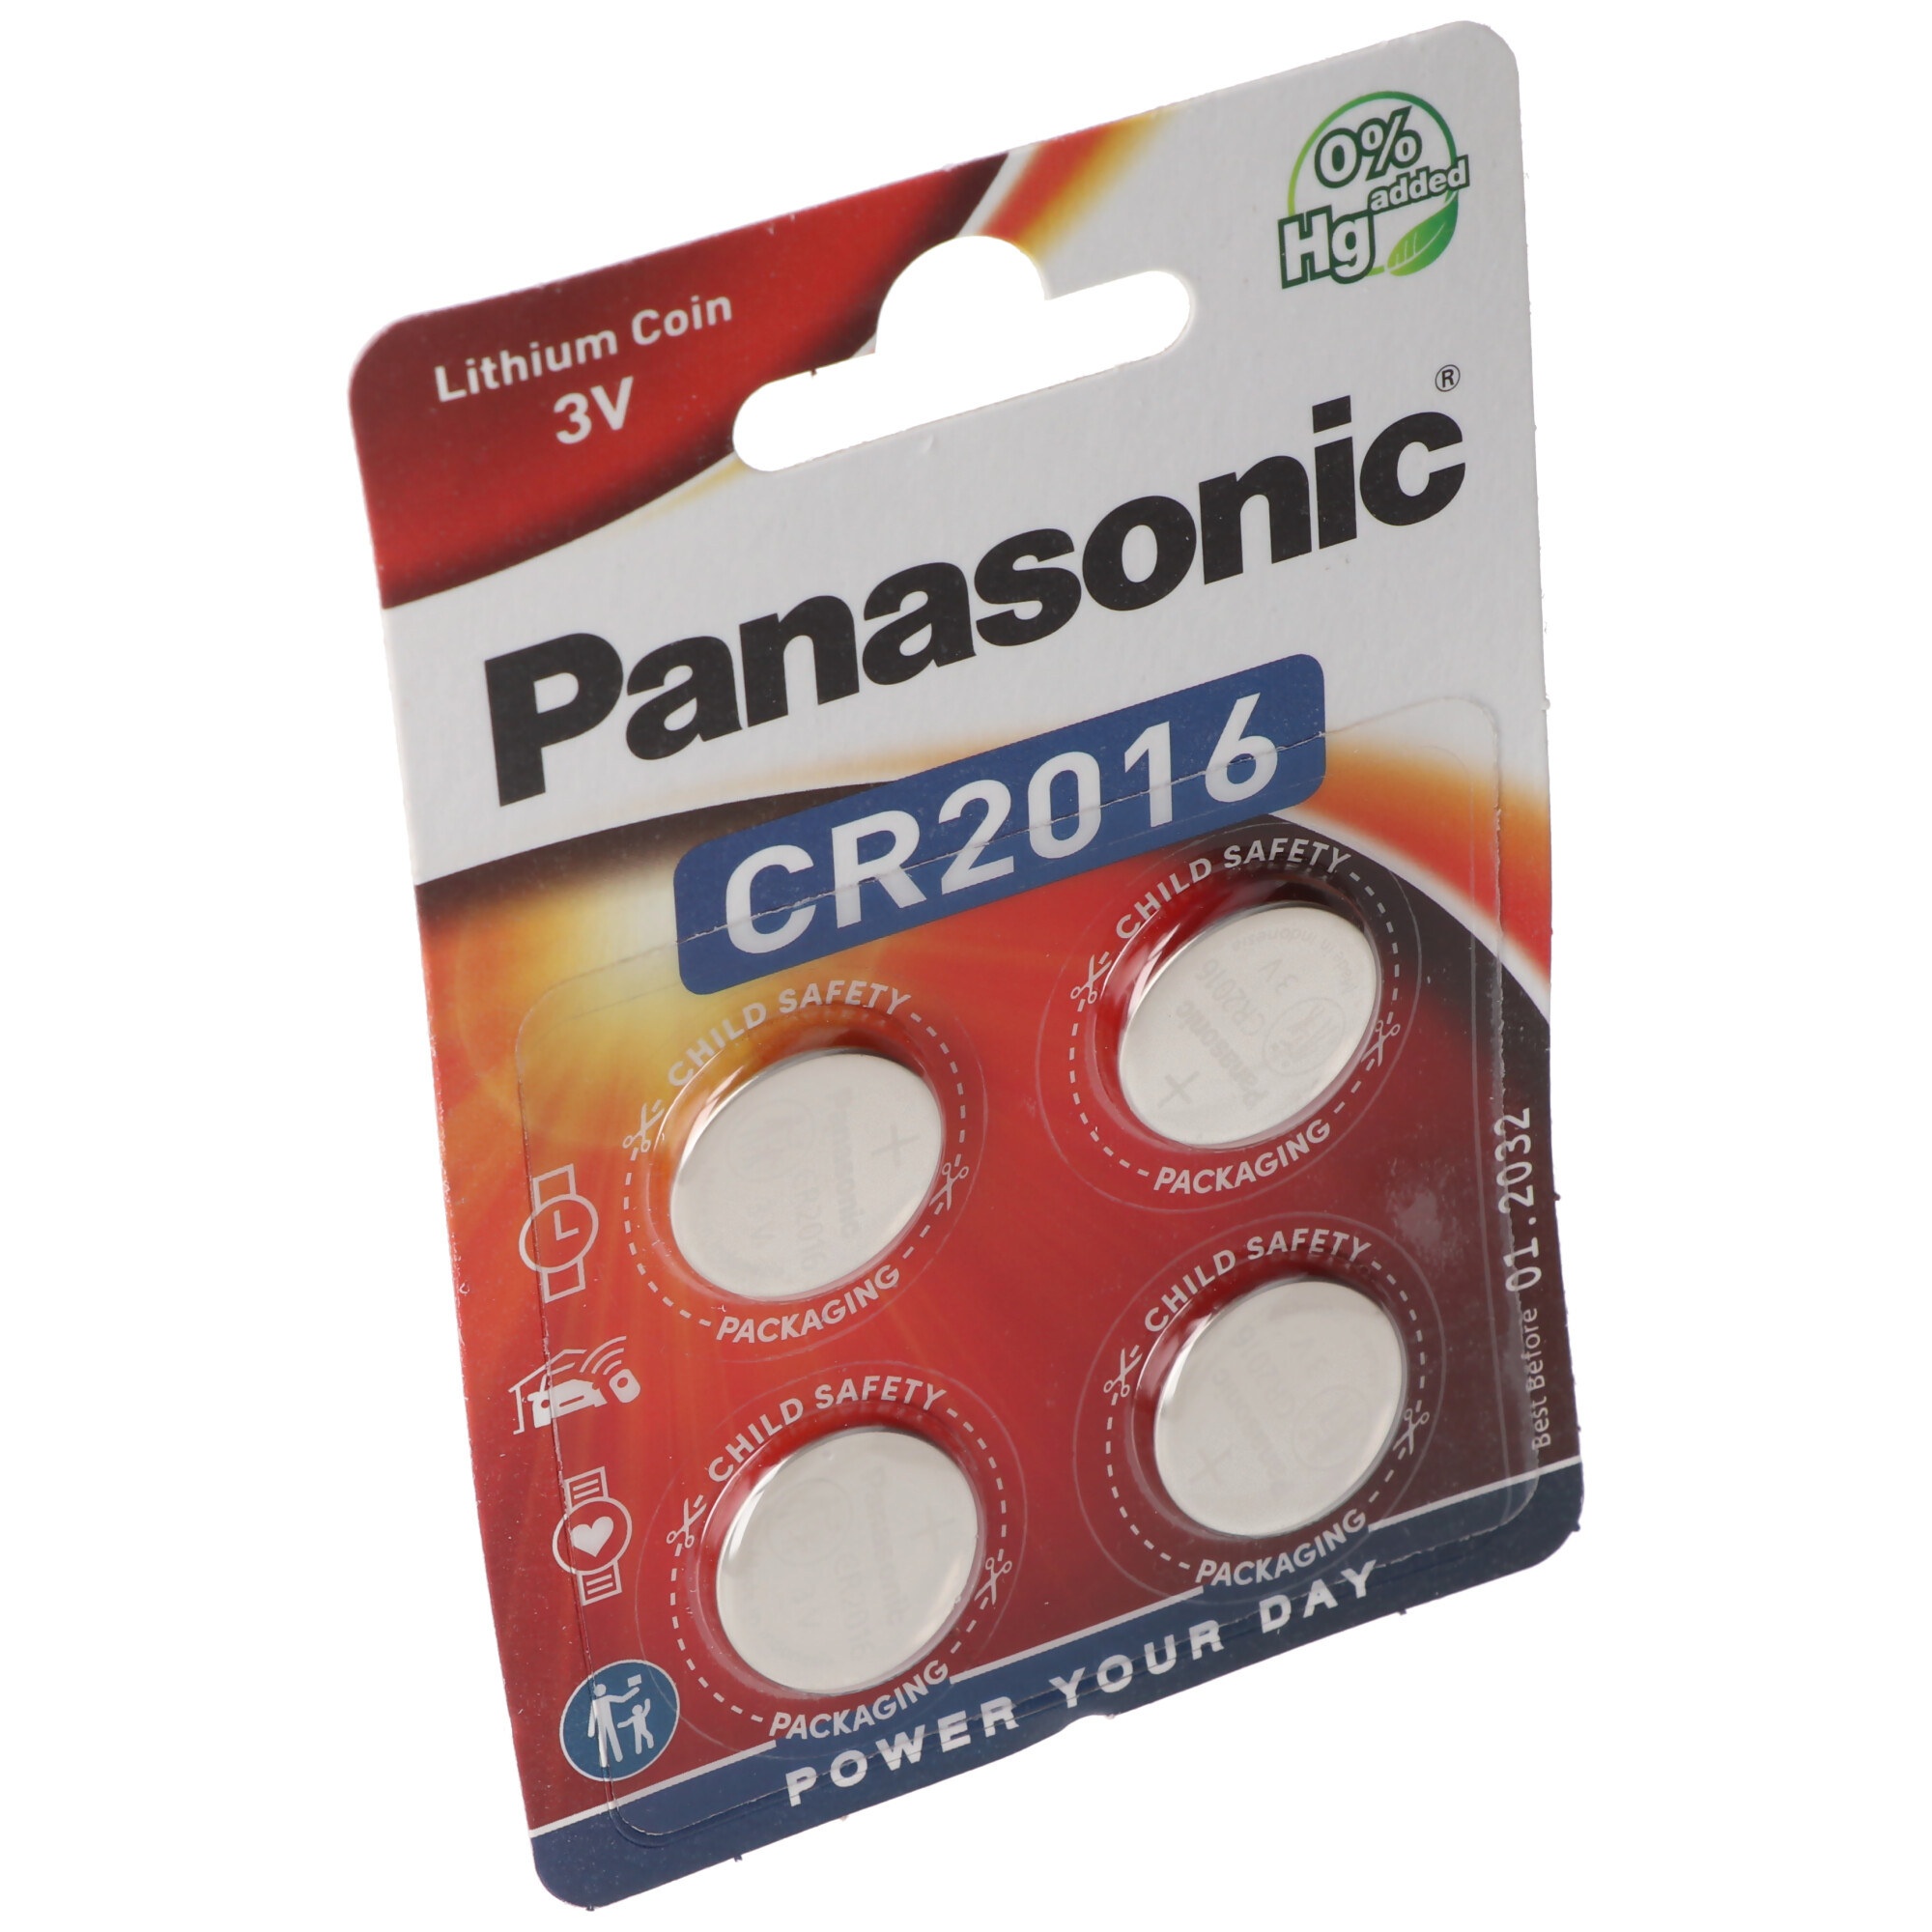 Panasonic Batterie Lithium, Knopfzelle, CR2016, 3V Electronics, Lithium Power, Retail Blister (4-Pack)